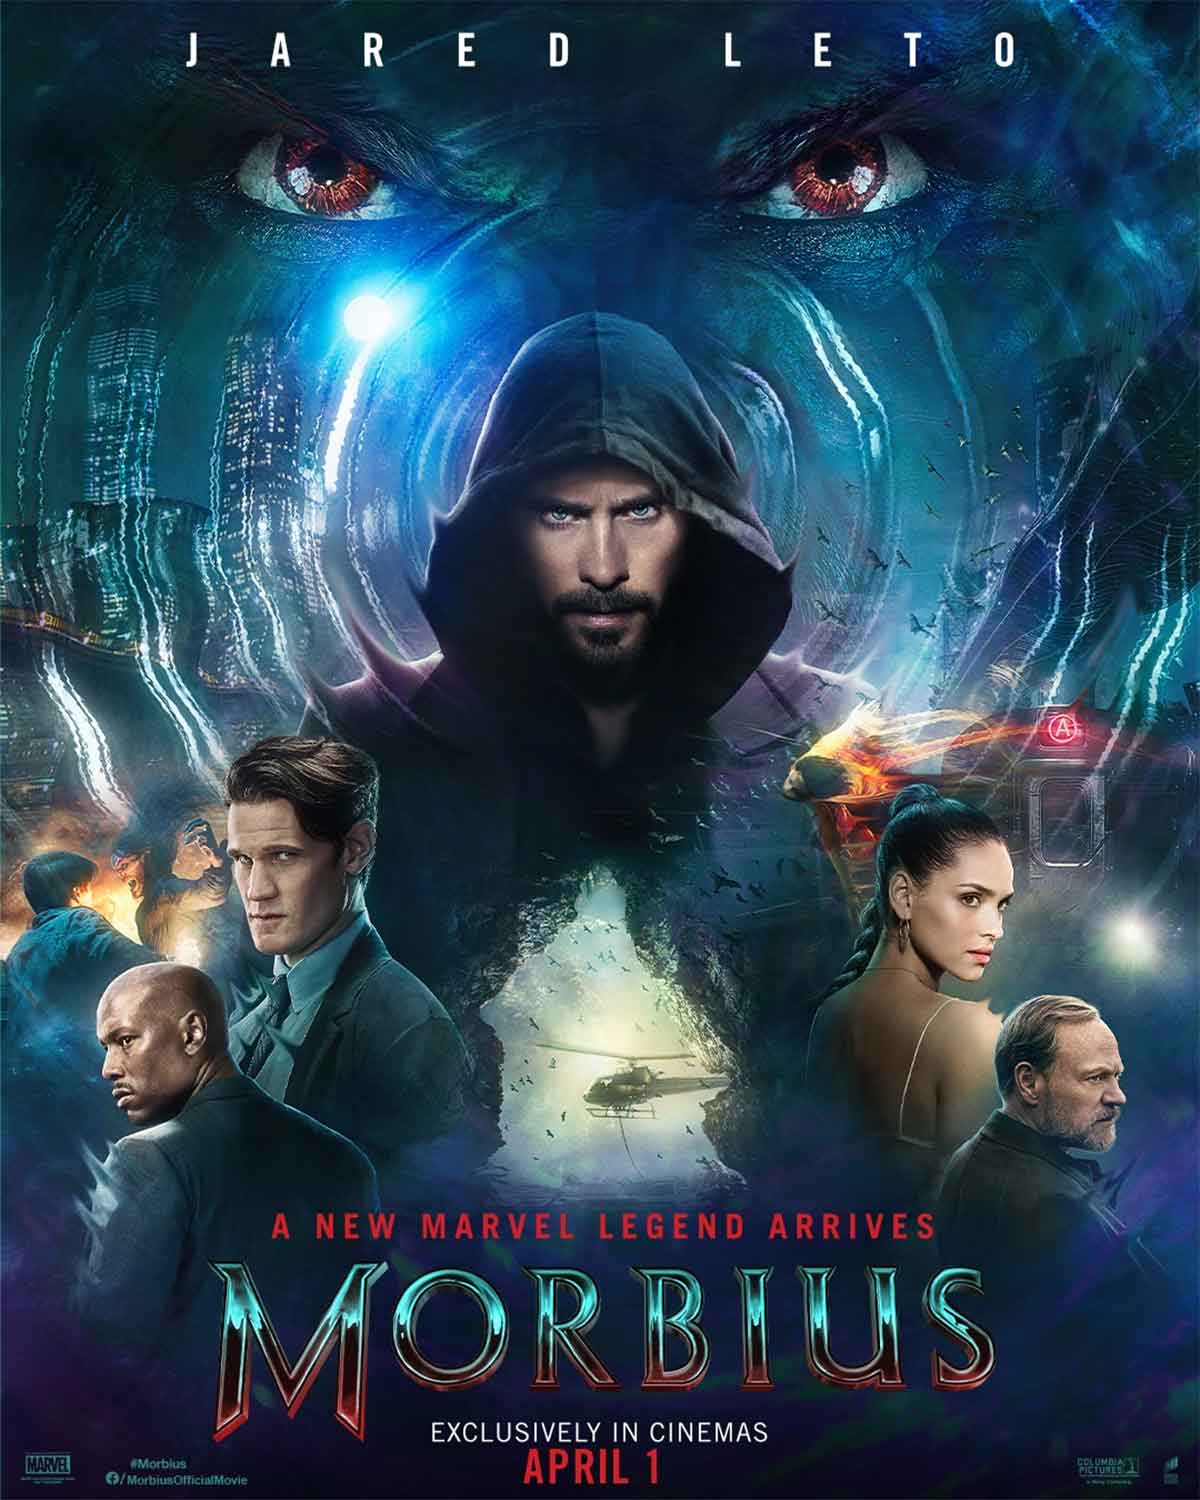 Genial nuevo póster de Morbius